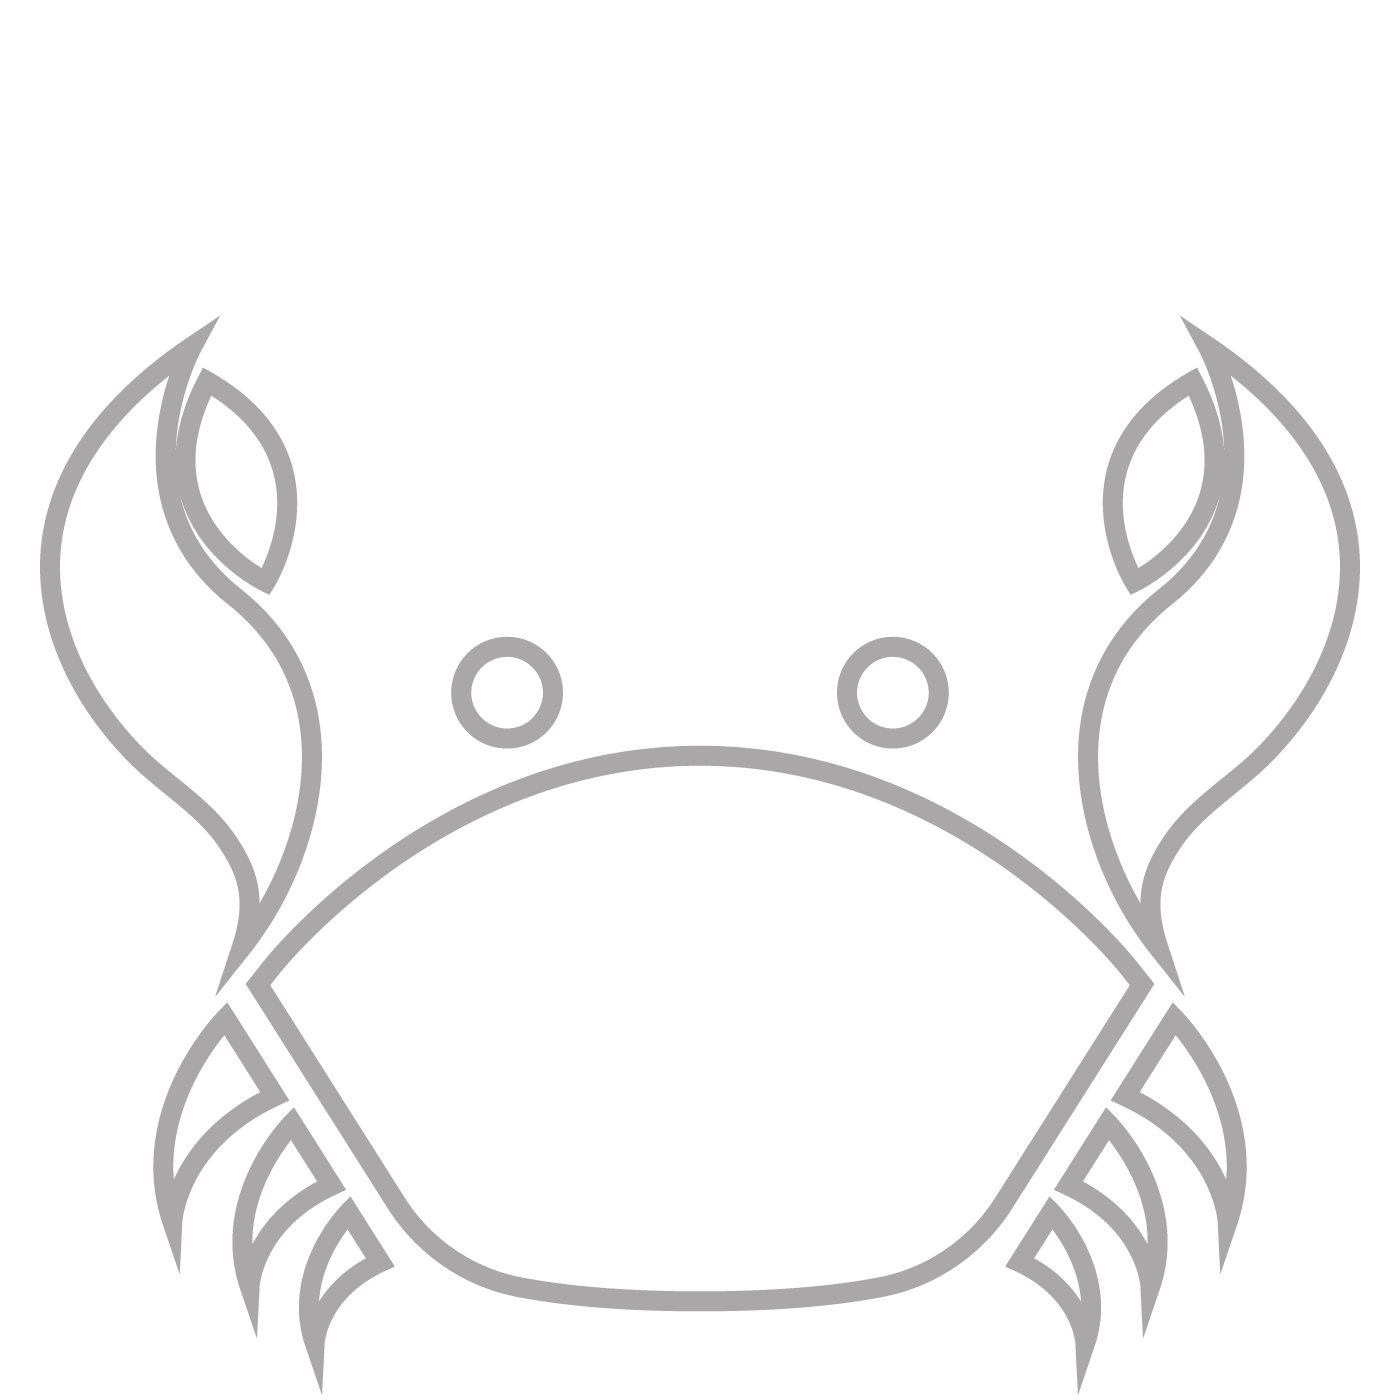 Image Crab